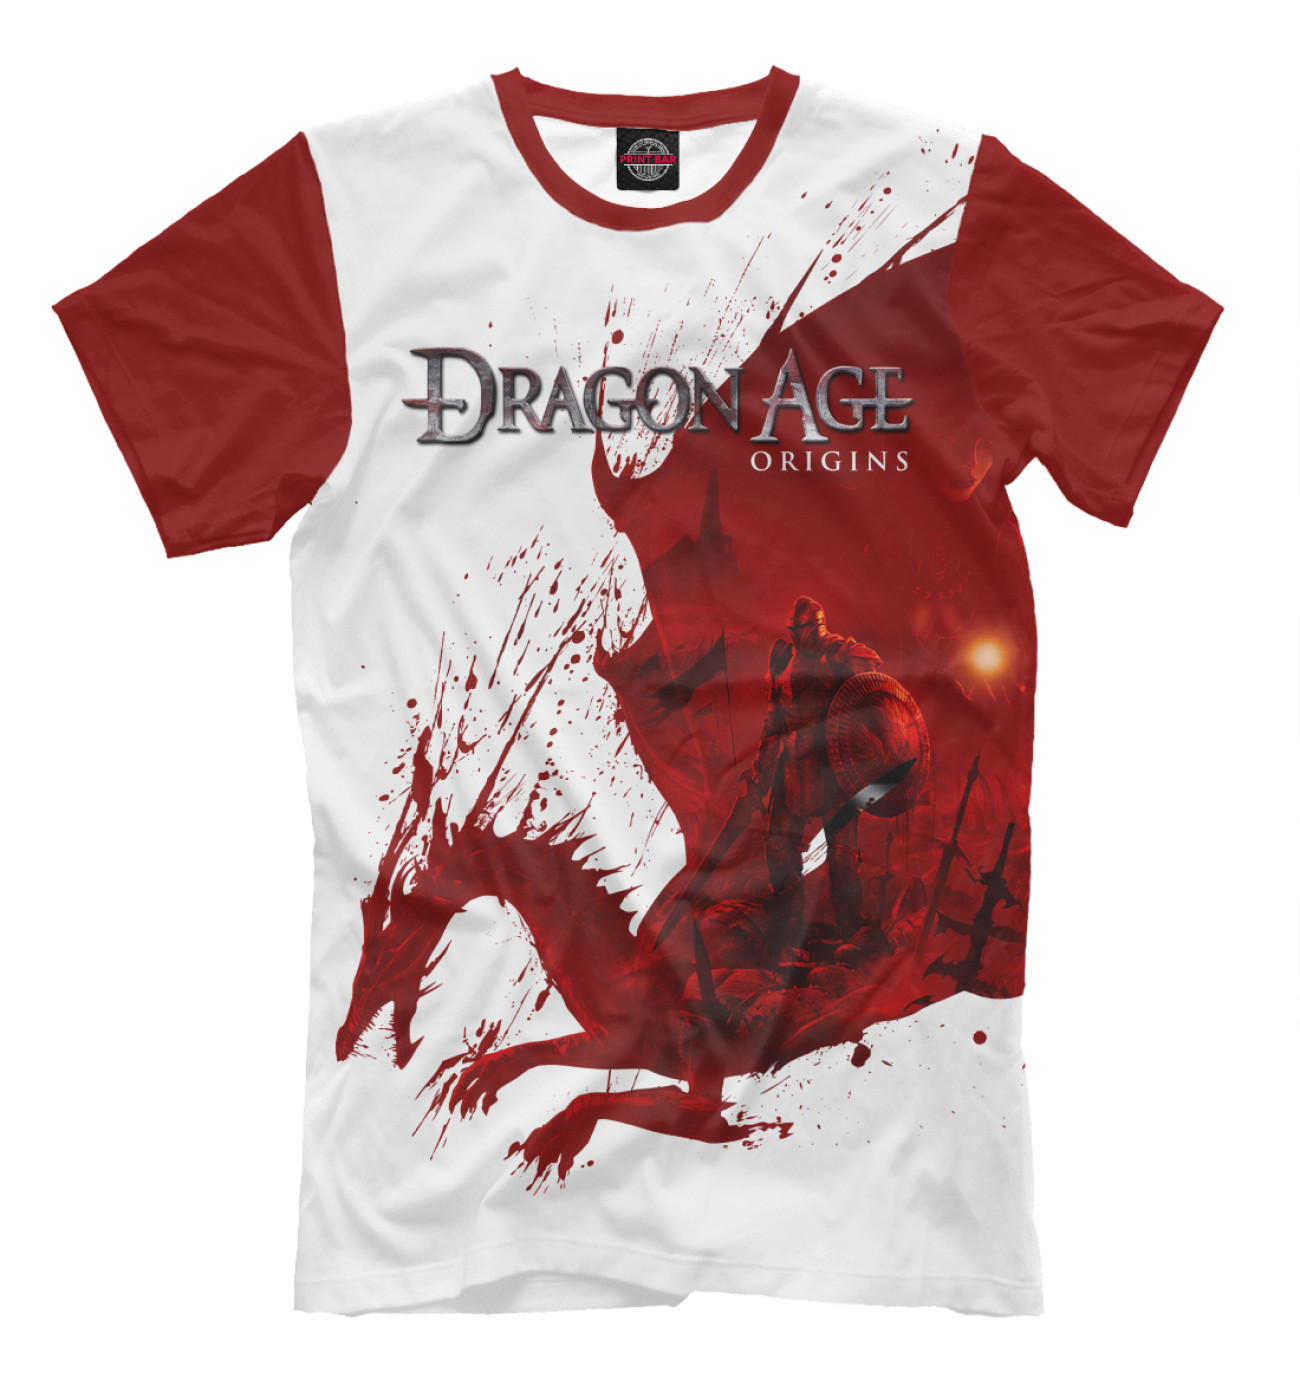 Мужская Футболка Dragon Age Origins, артикул: DRG-378834-fut-2